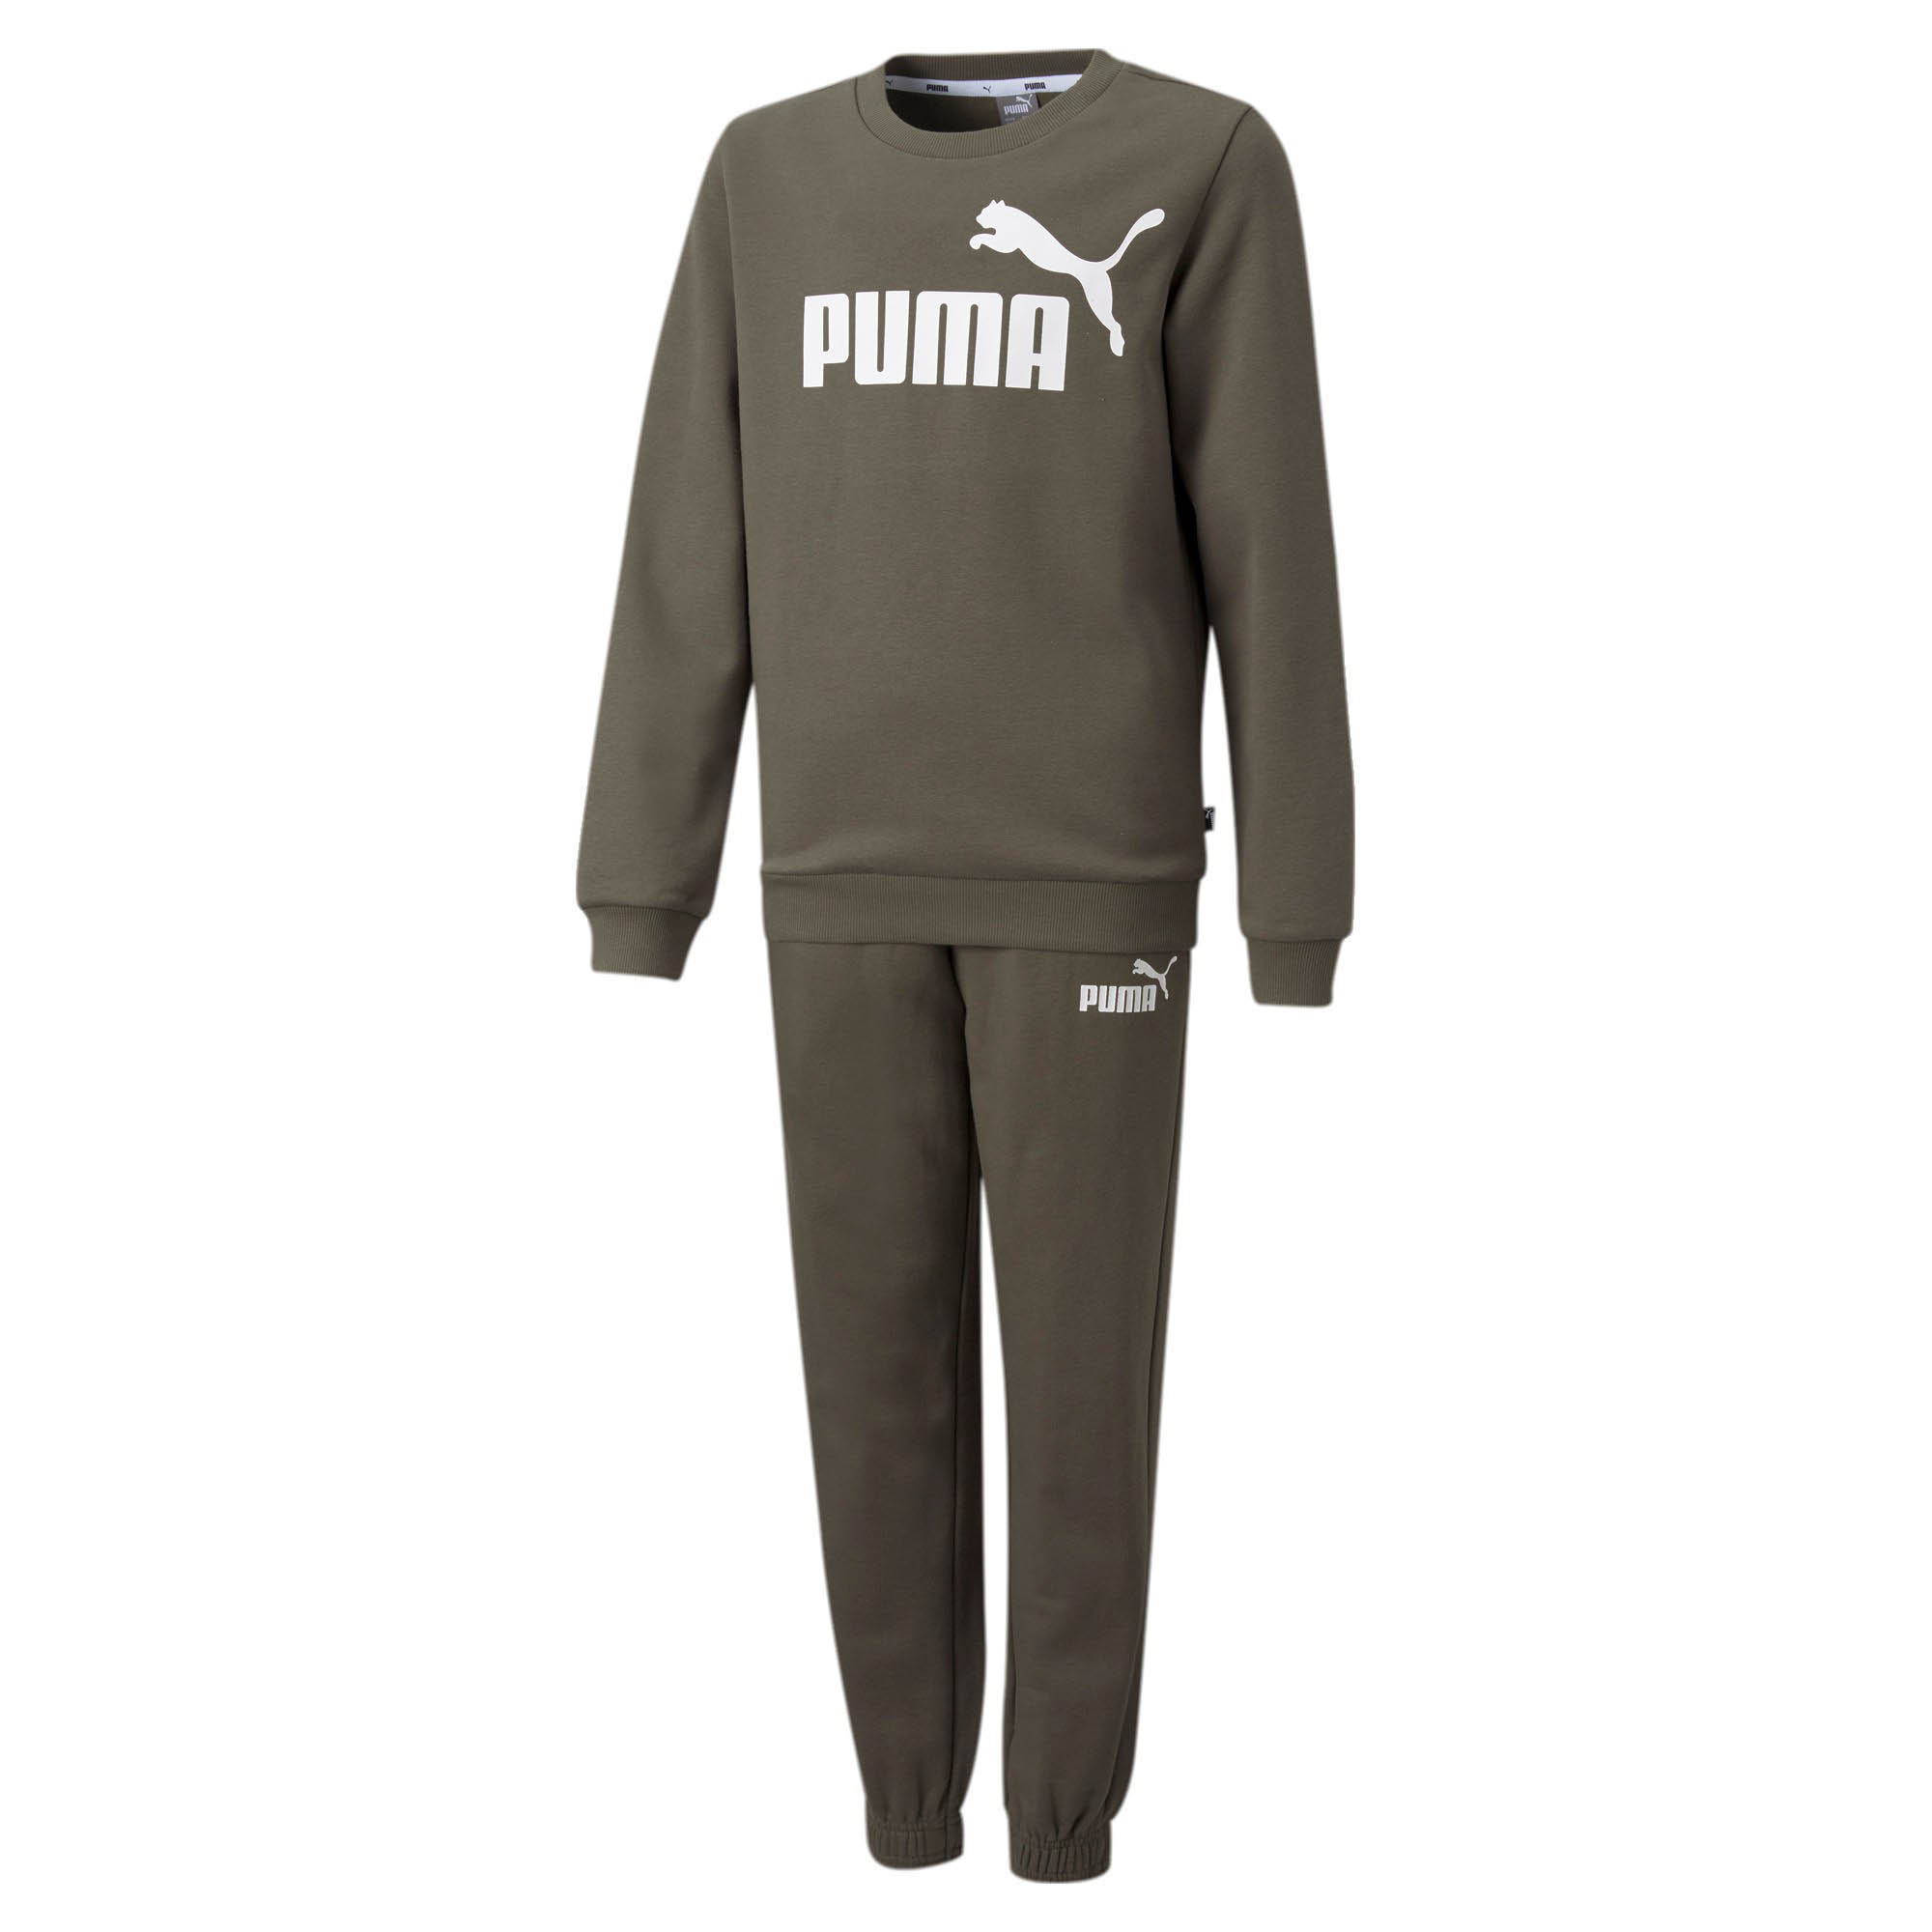 Puma ESS LOGO Sweat Suit FL B Kinder Unisex Jogginganzug 582119 grün